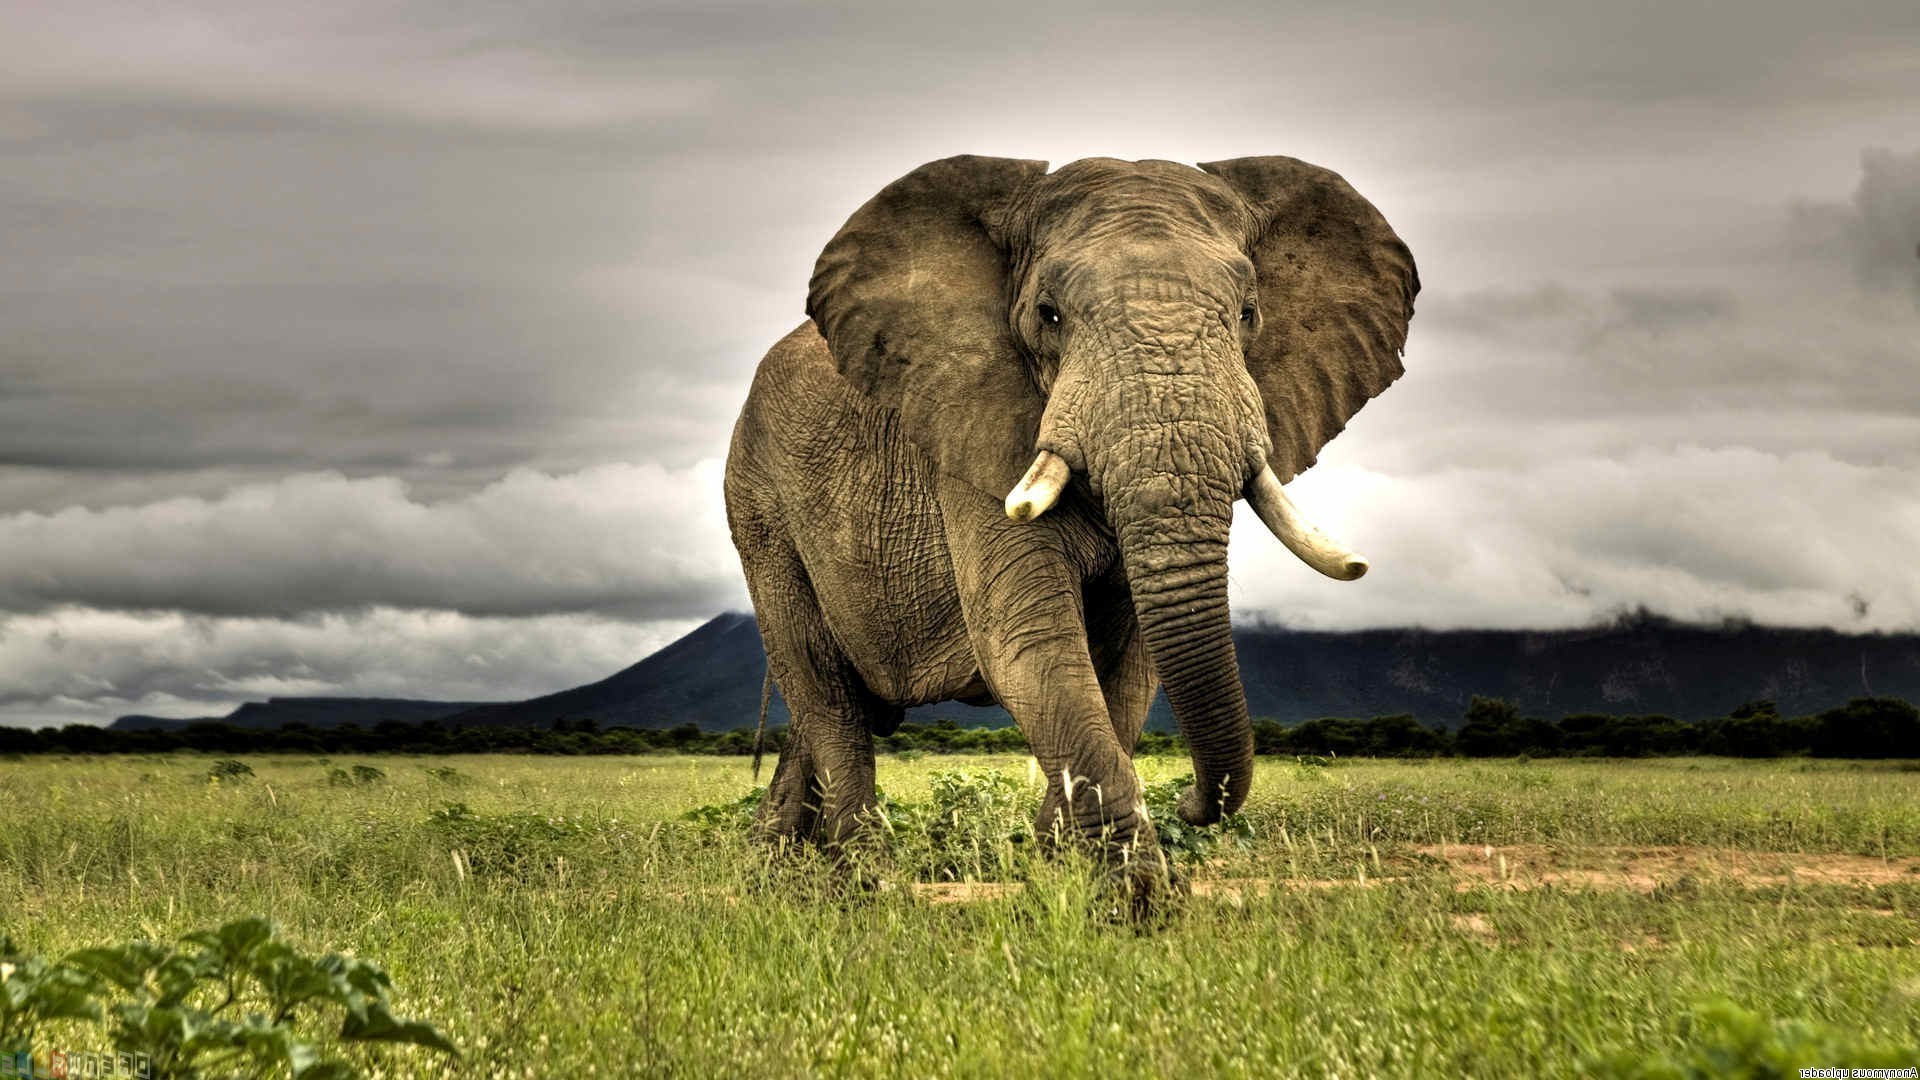 elefantentapete,elefant,elefanten und mammuts,landtier,wiese,tierwelt